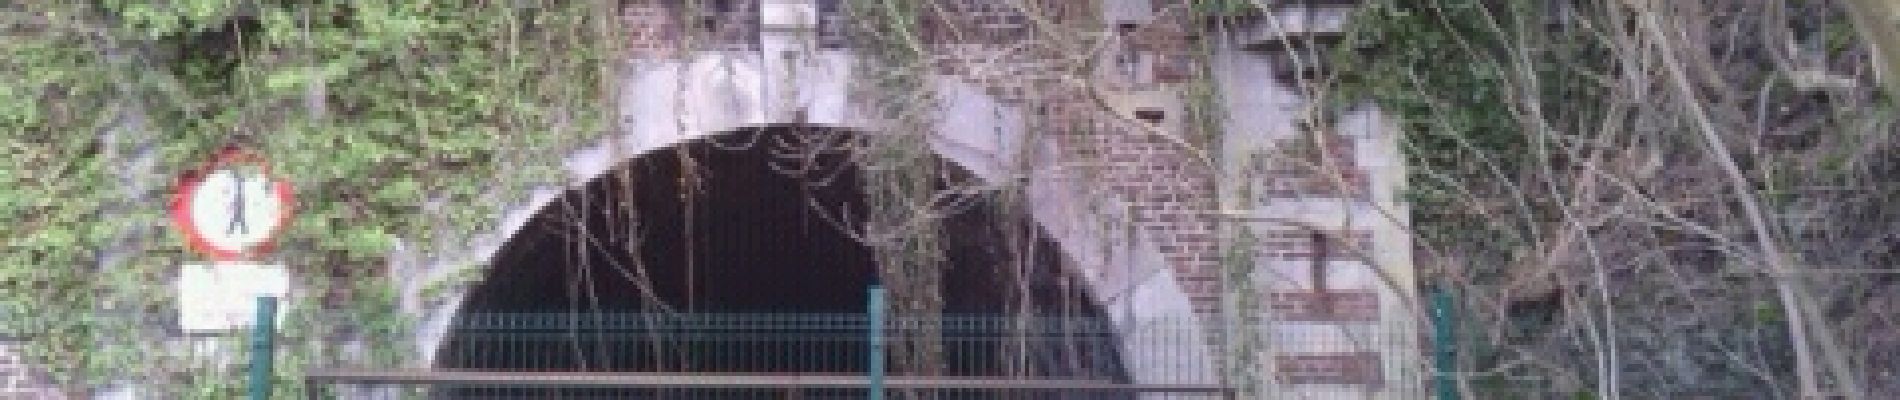 Punto di interesse Dalhem - Point 1 ancien tunnel trimbleu - Photo